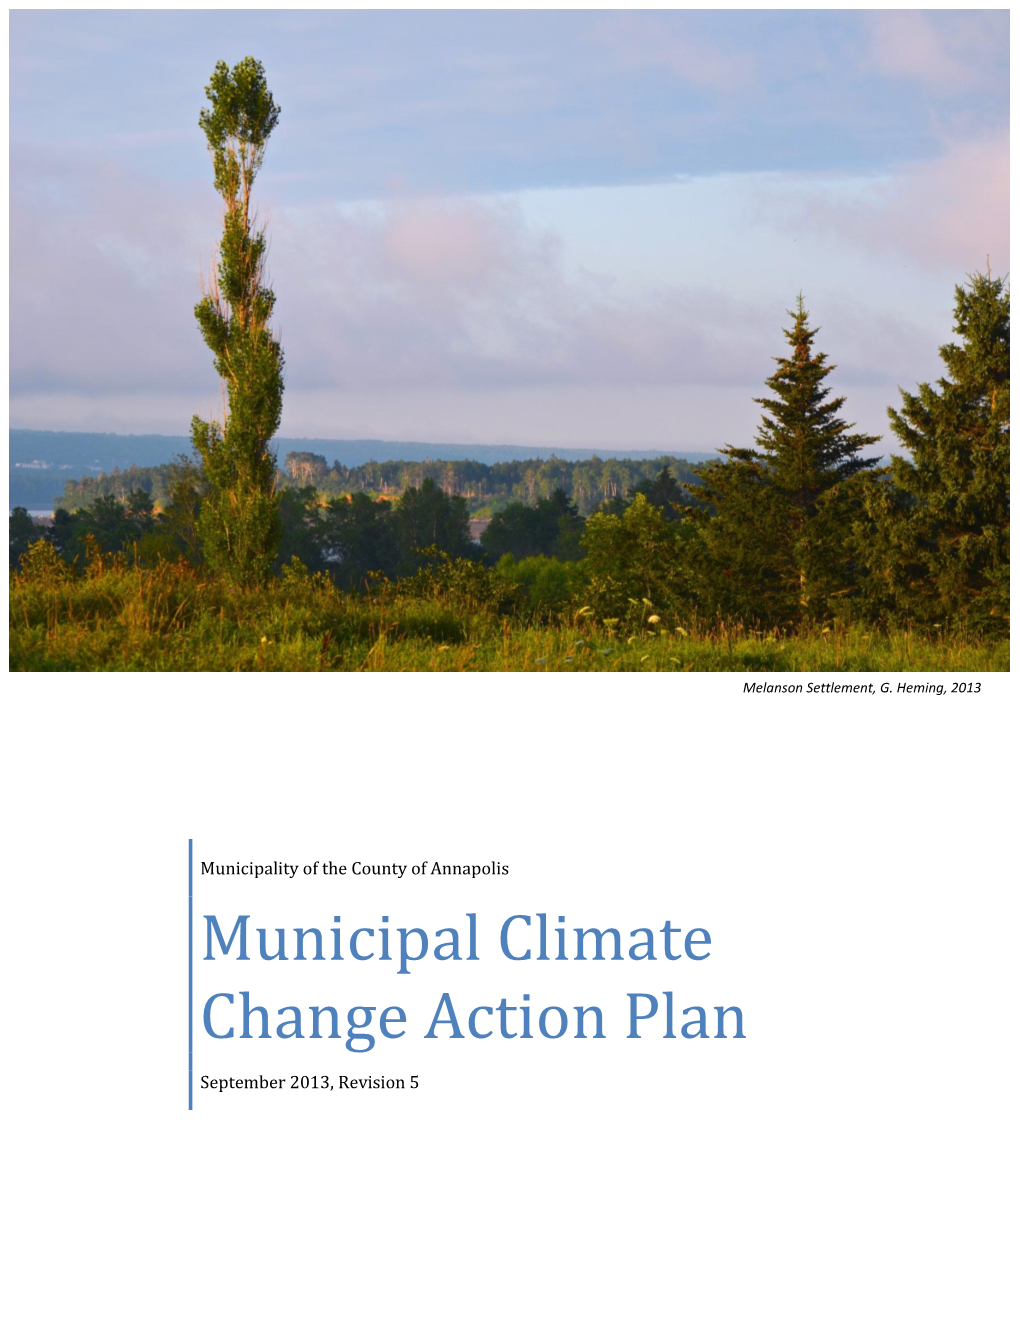 Municipal Climate Change Action Plan